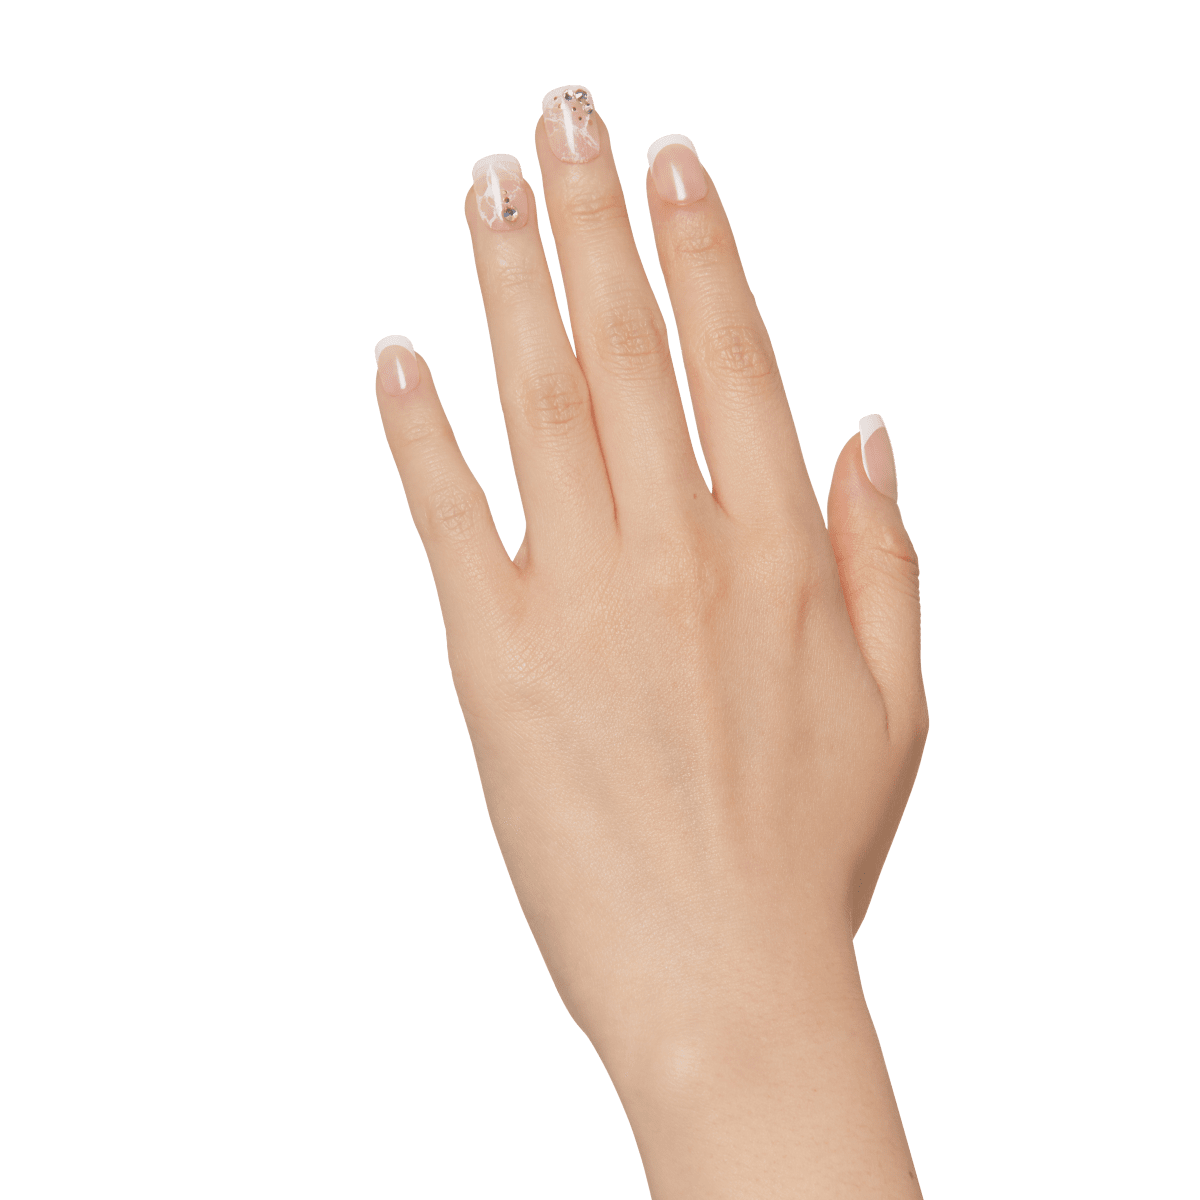 imPRESS Press-On Manicure - My Worth